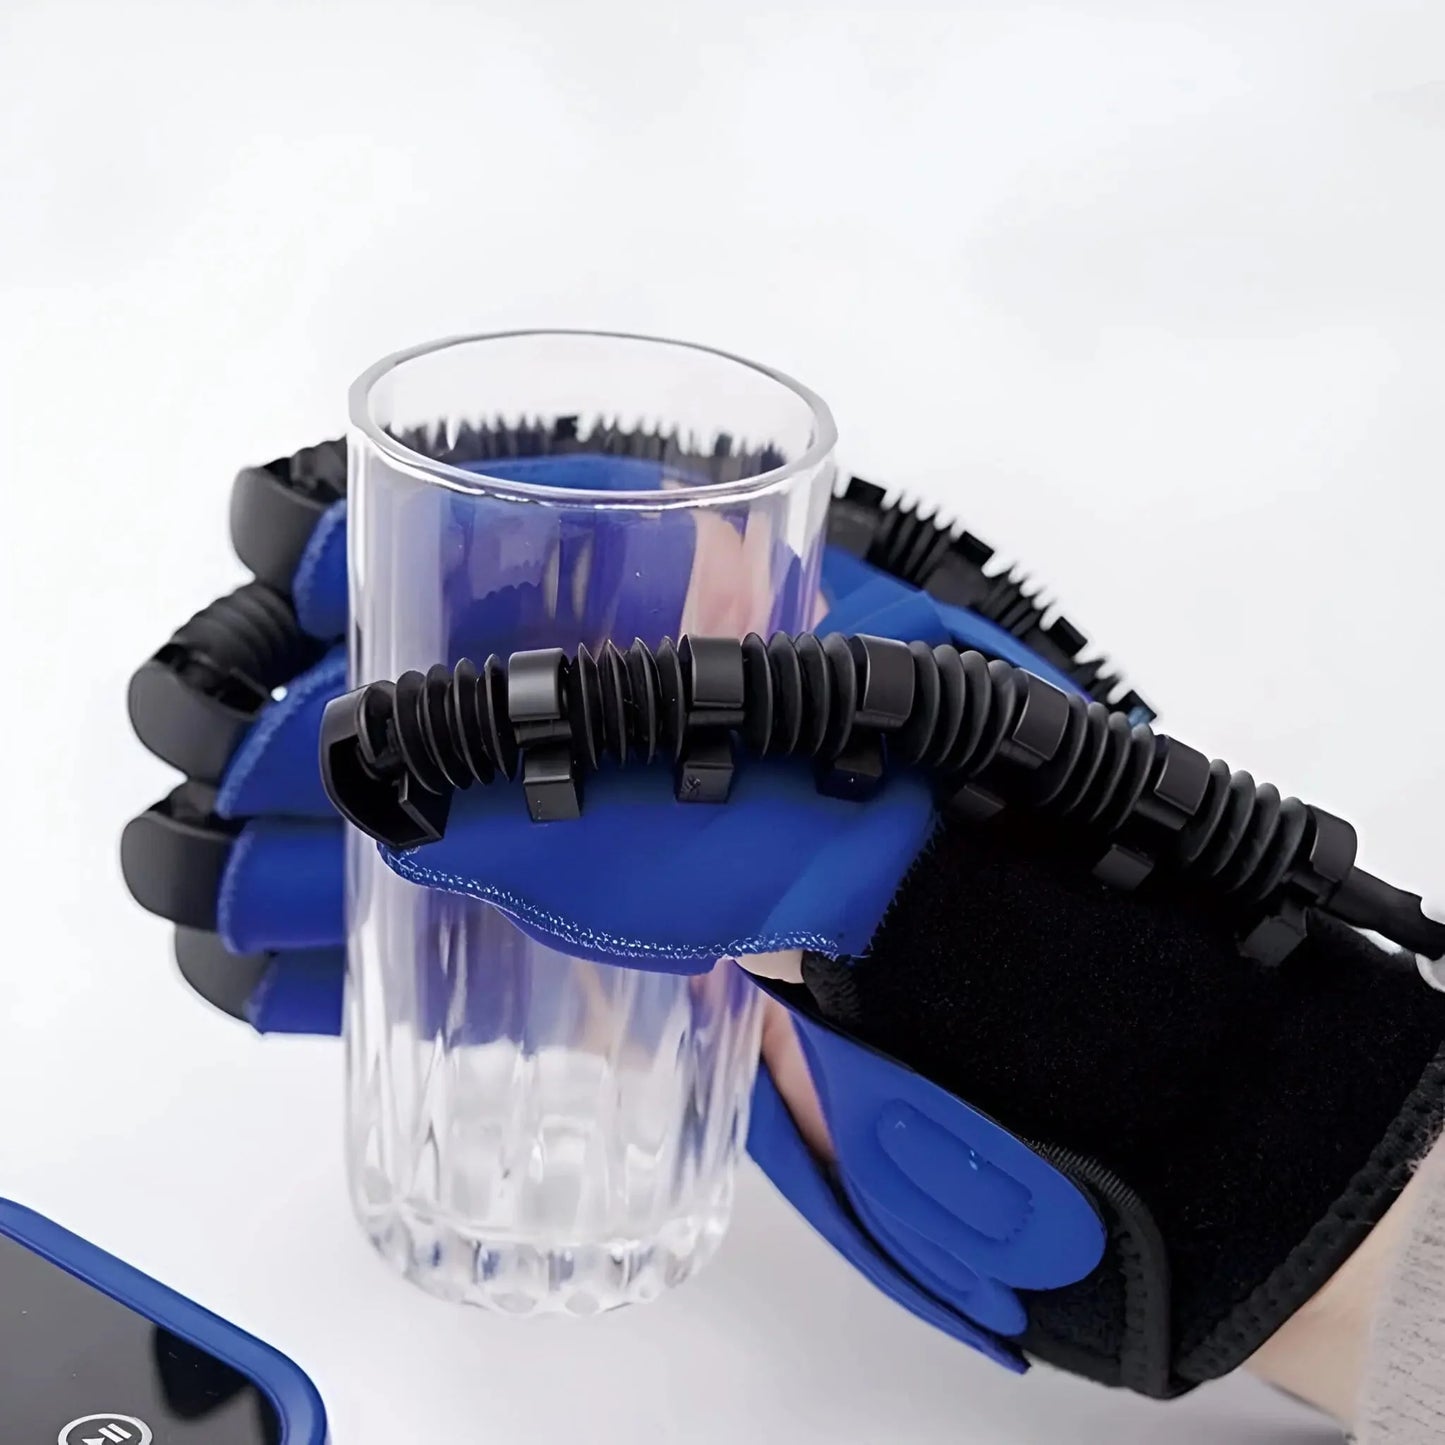 Advanced Rehabilitation Robot Gloves - Device Finger Exerciser For Stroke Patients